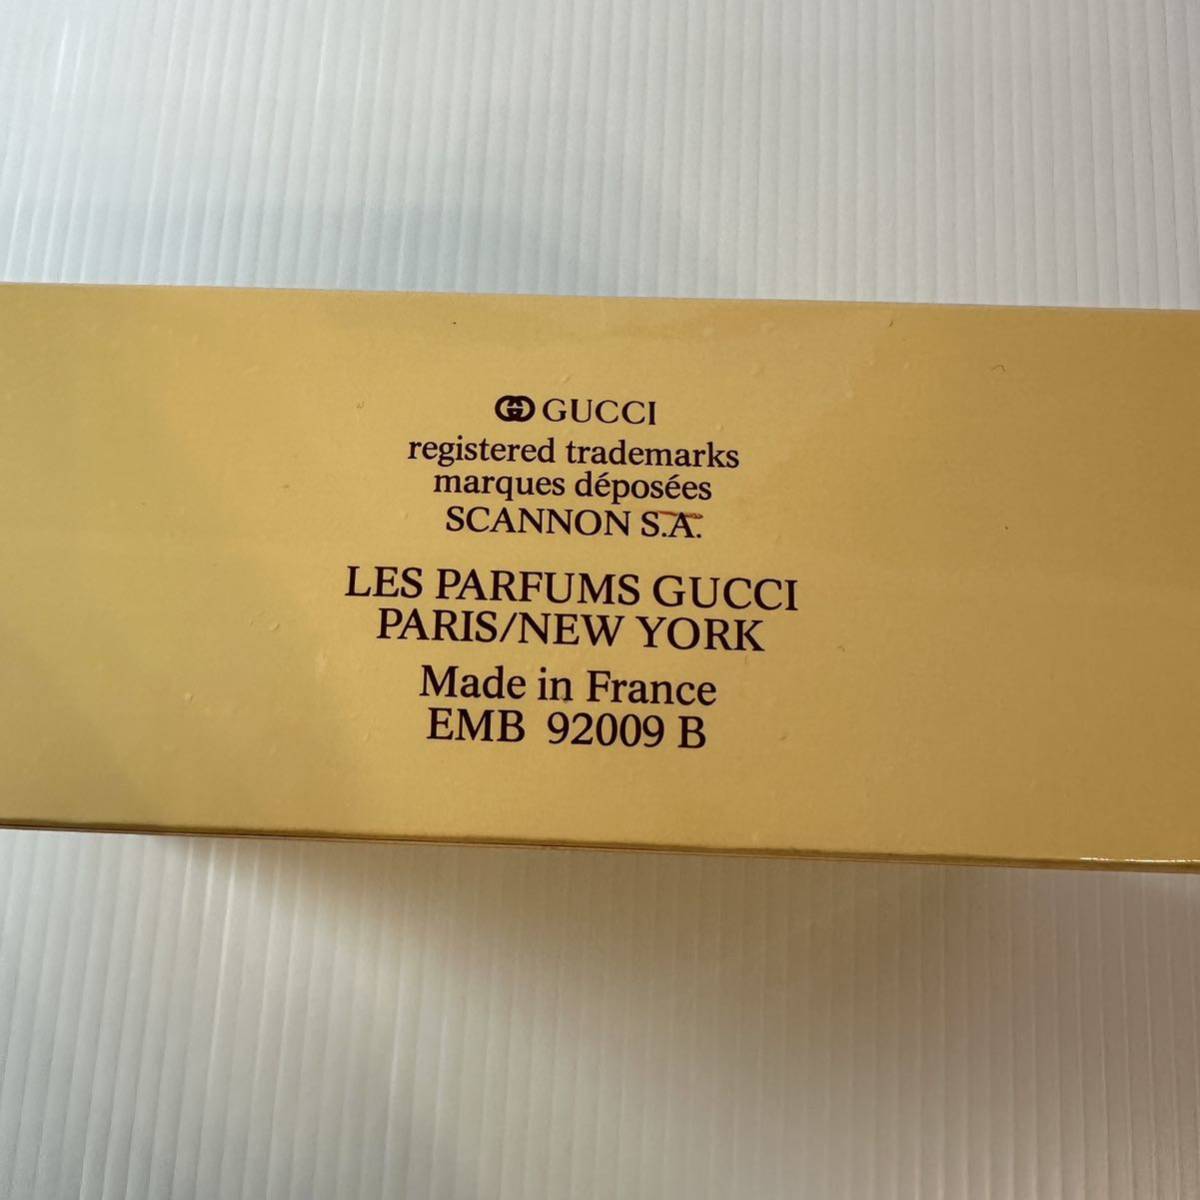 [ не использовался ] GUCCI Gucci No1 духи мыло сумка комплект TROUSSE DE VOYAGE Old Pal fam60ml сабо n100g бардачок сумка 